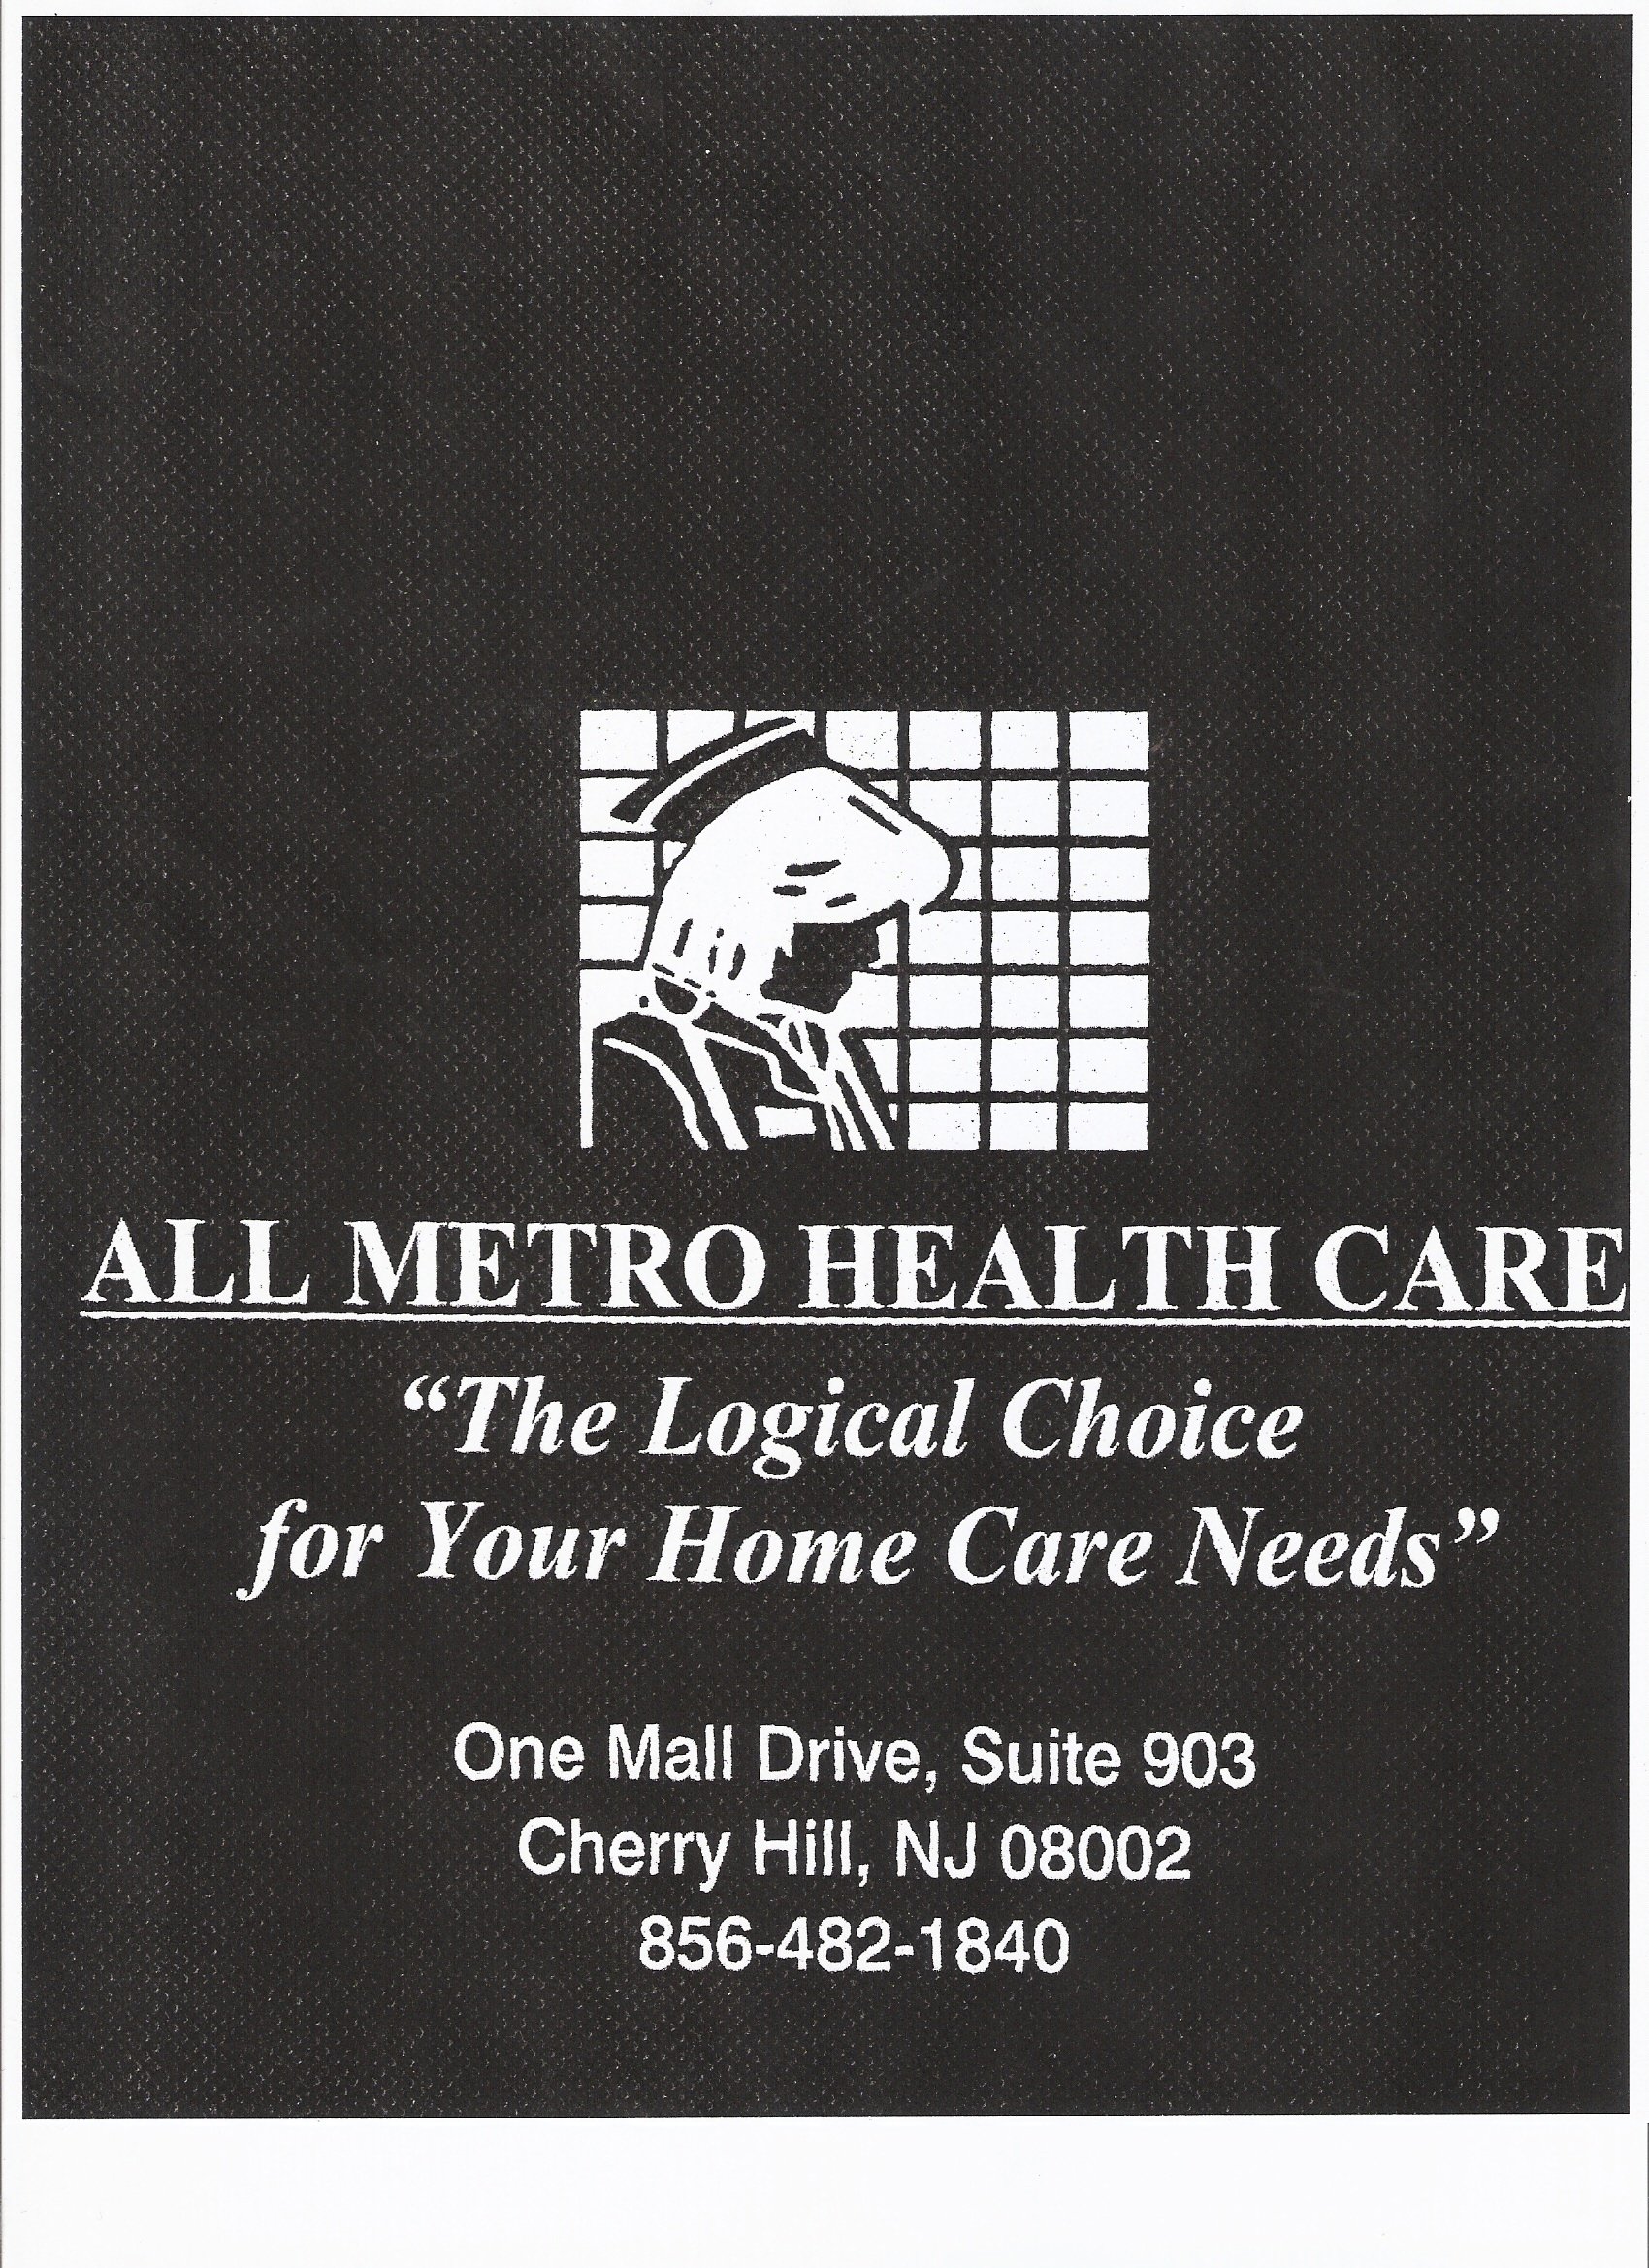 All-Metro Health Care image